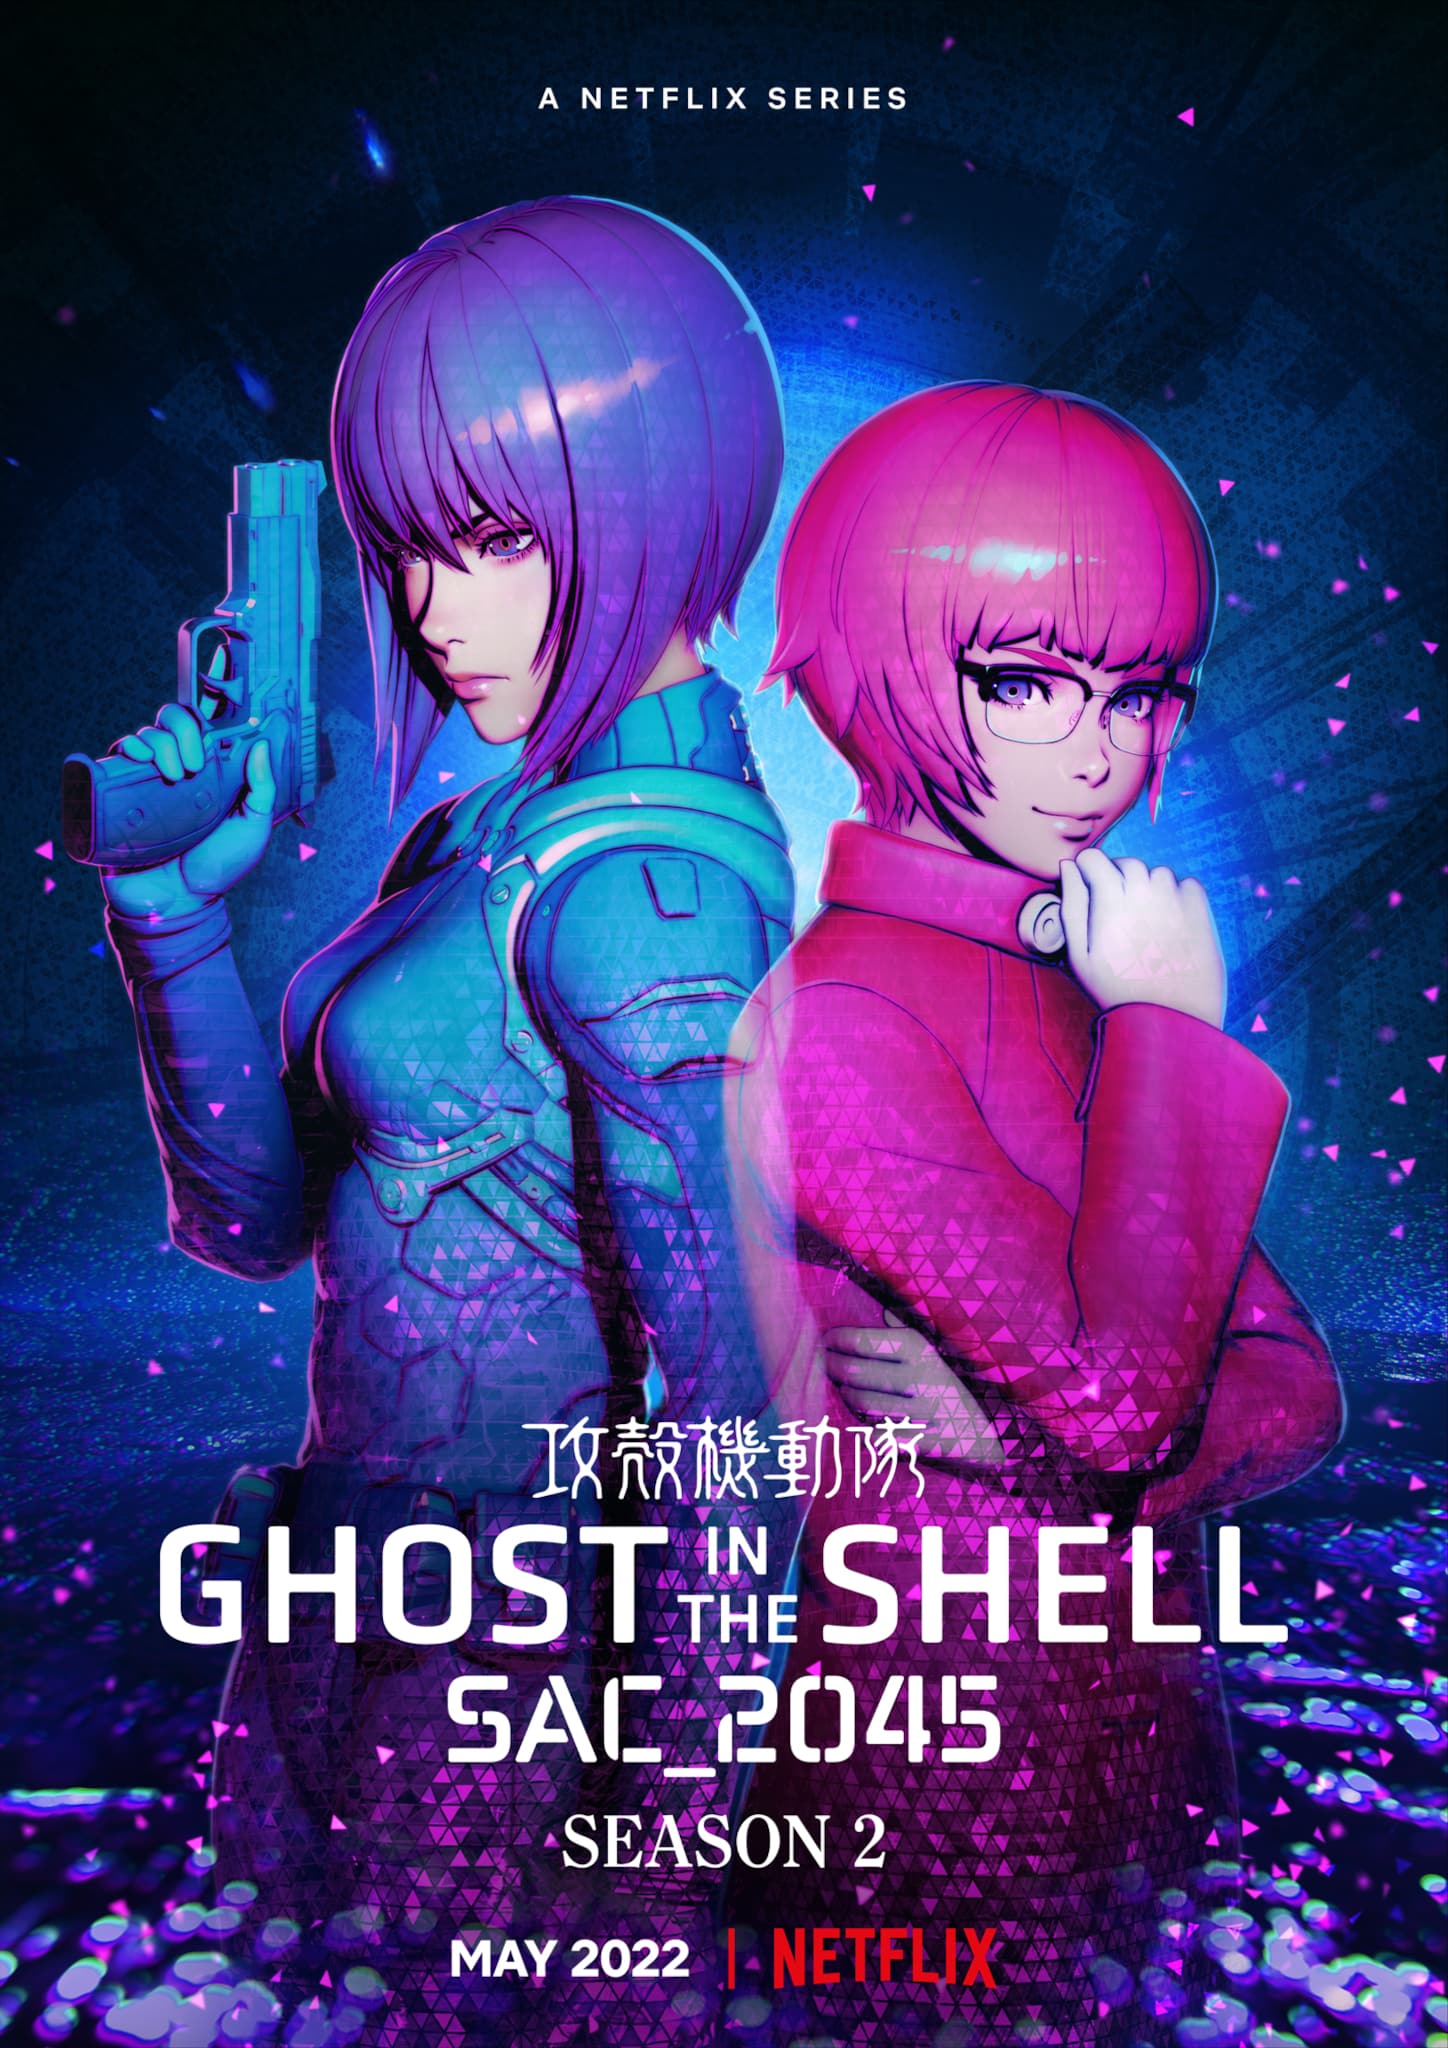 Premier visuel pour lanime Ghost in the Shell : SAC_2045 Saison 2